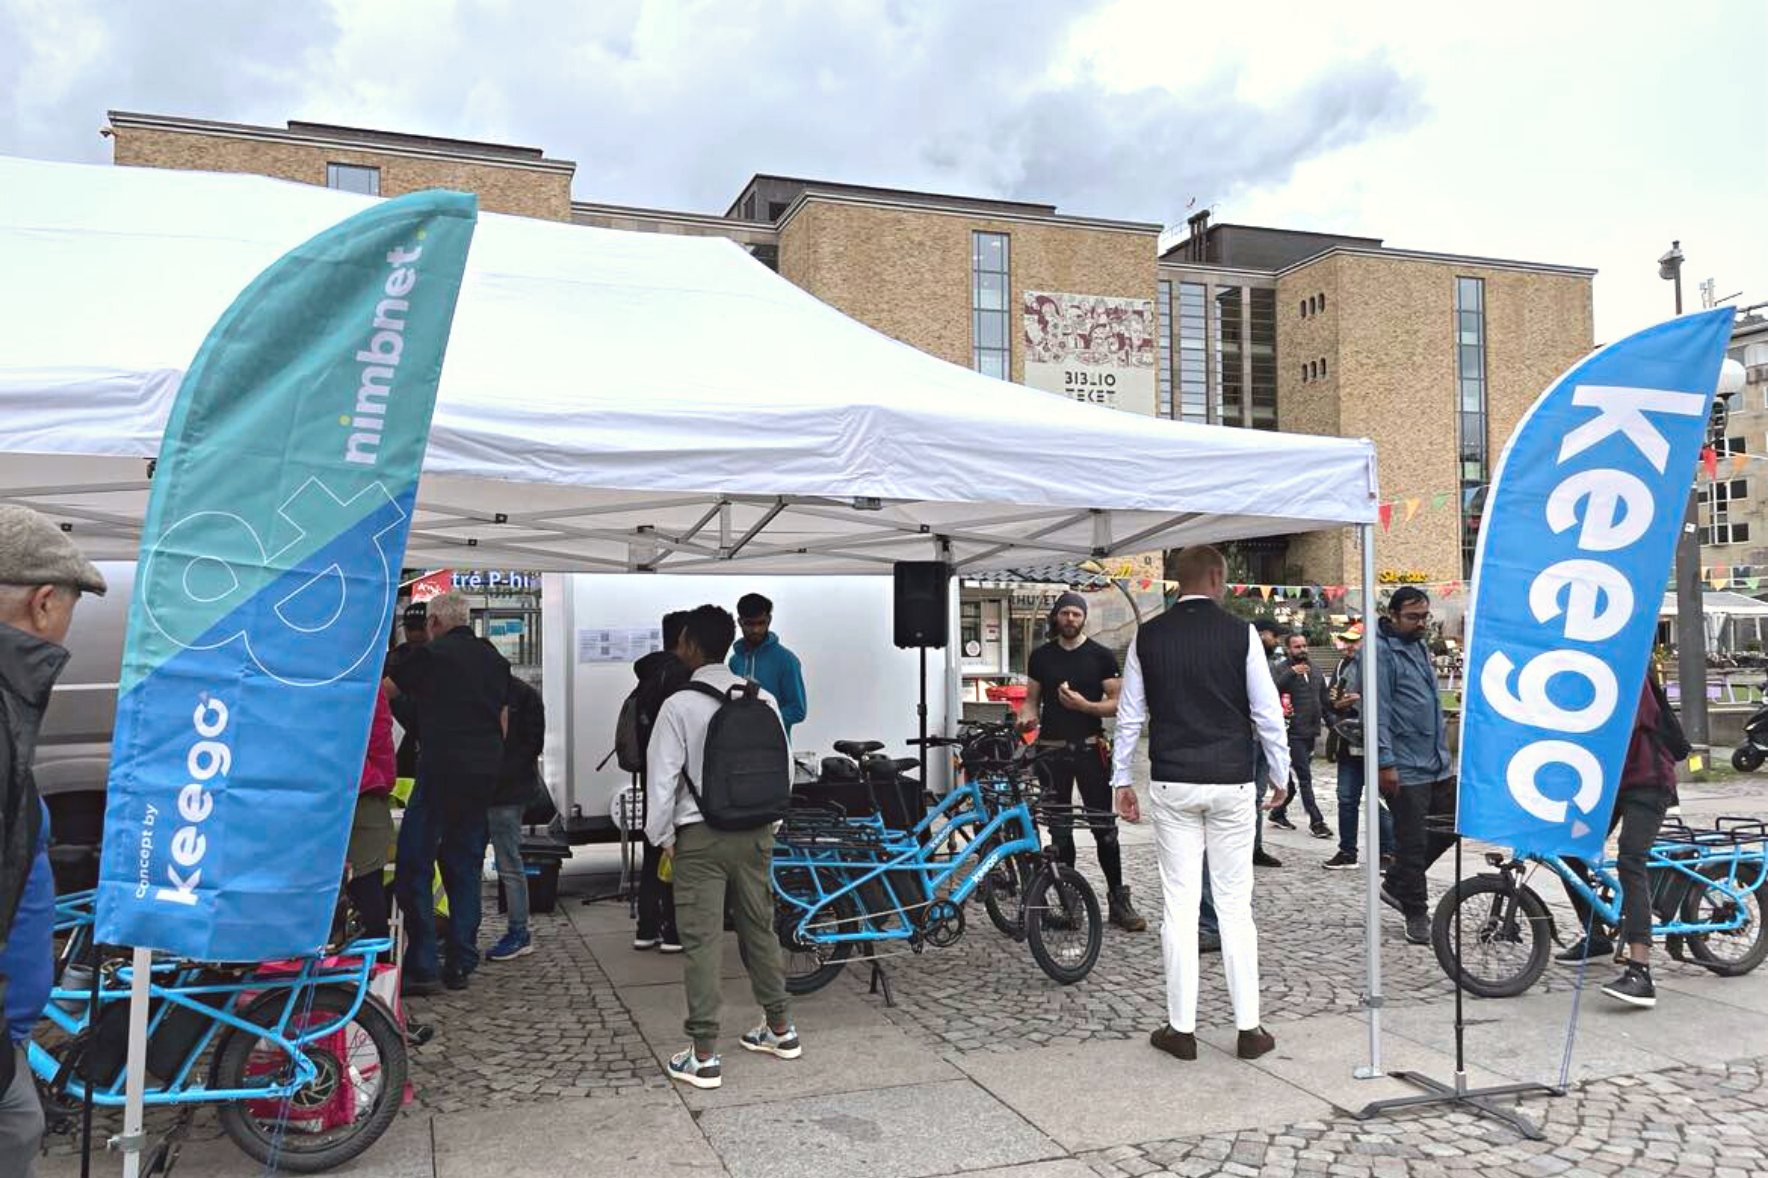 The test riding was taking place on Medborgarplatsen. - Keego Mobility